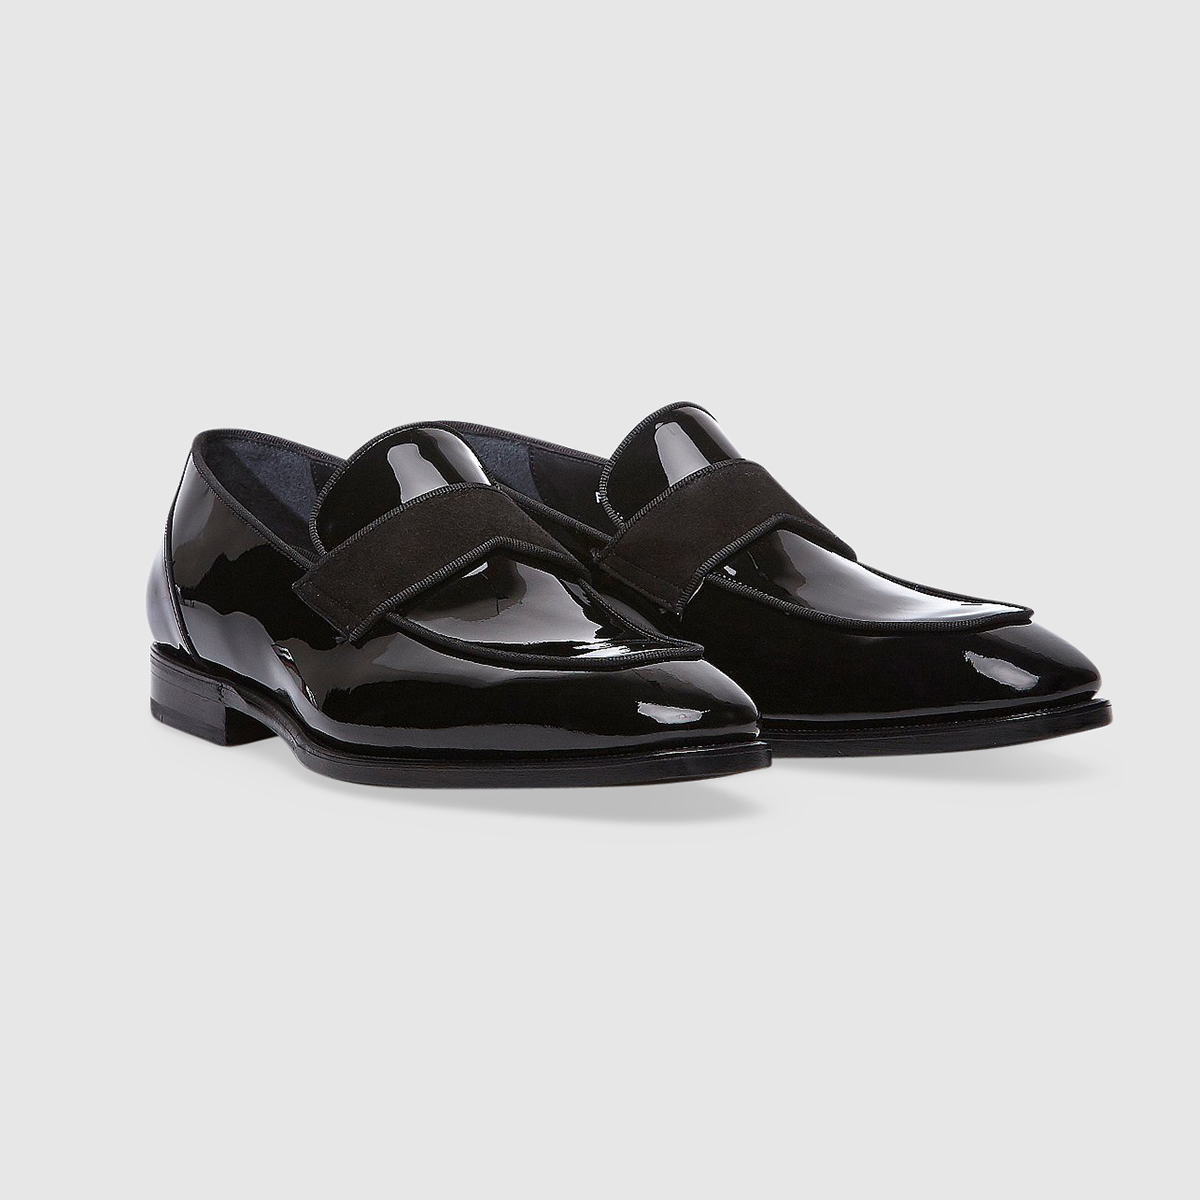 Classic Fabi Flex Loafers in Patent Black Gruppo Fabi on sale 2022 2